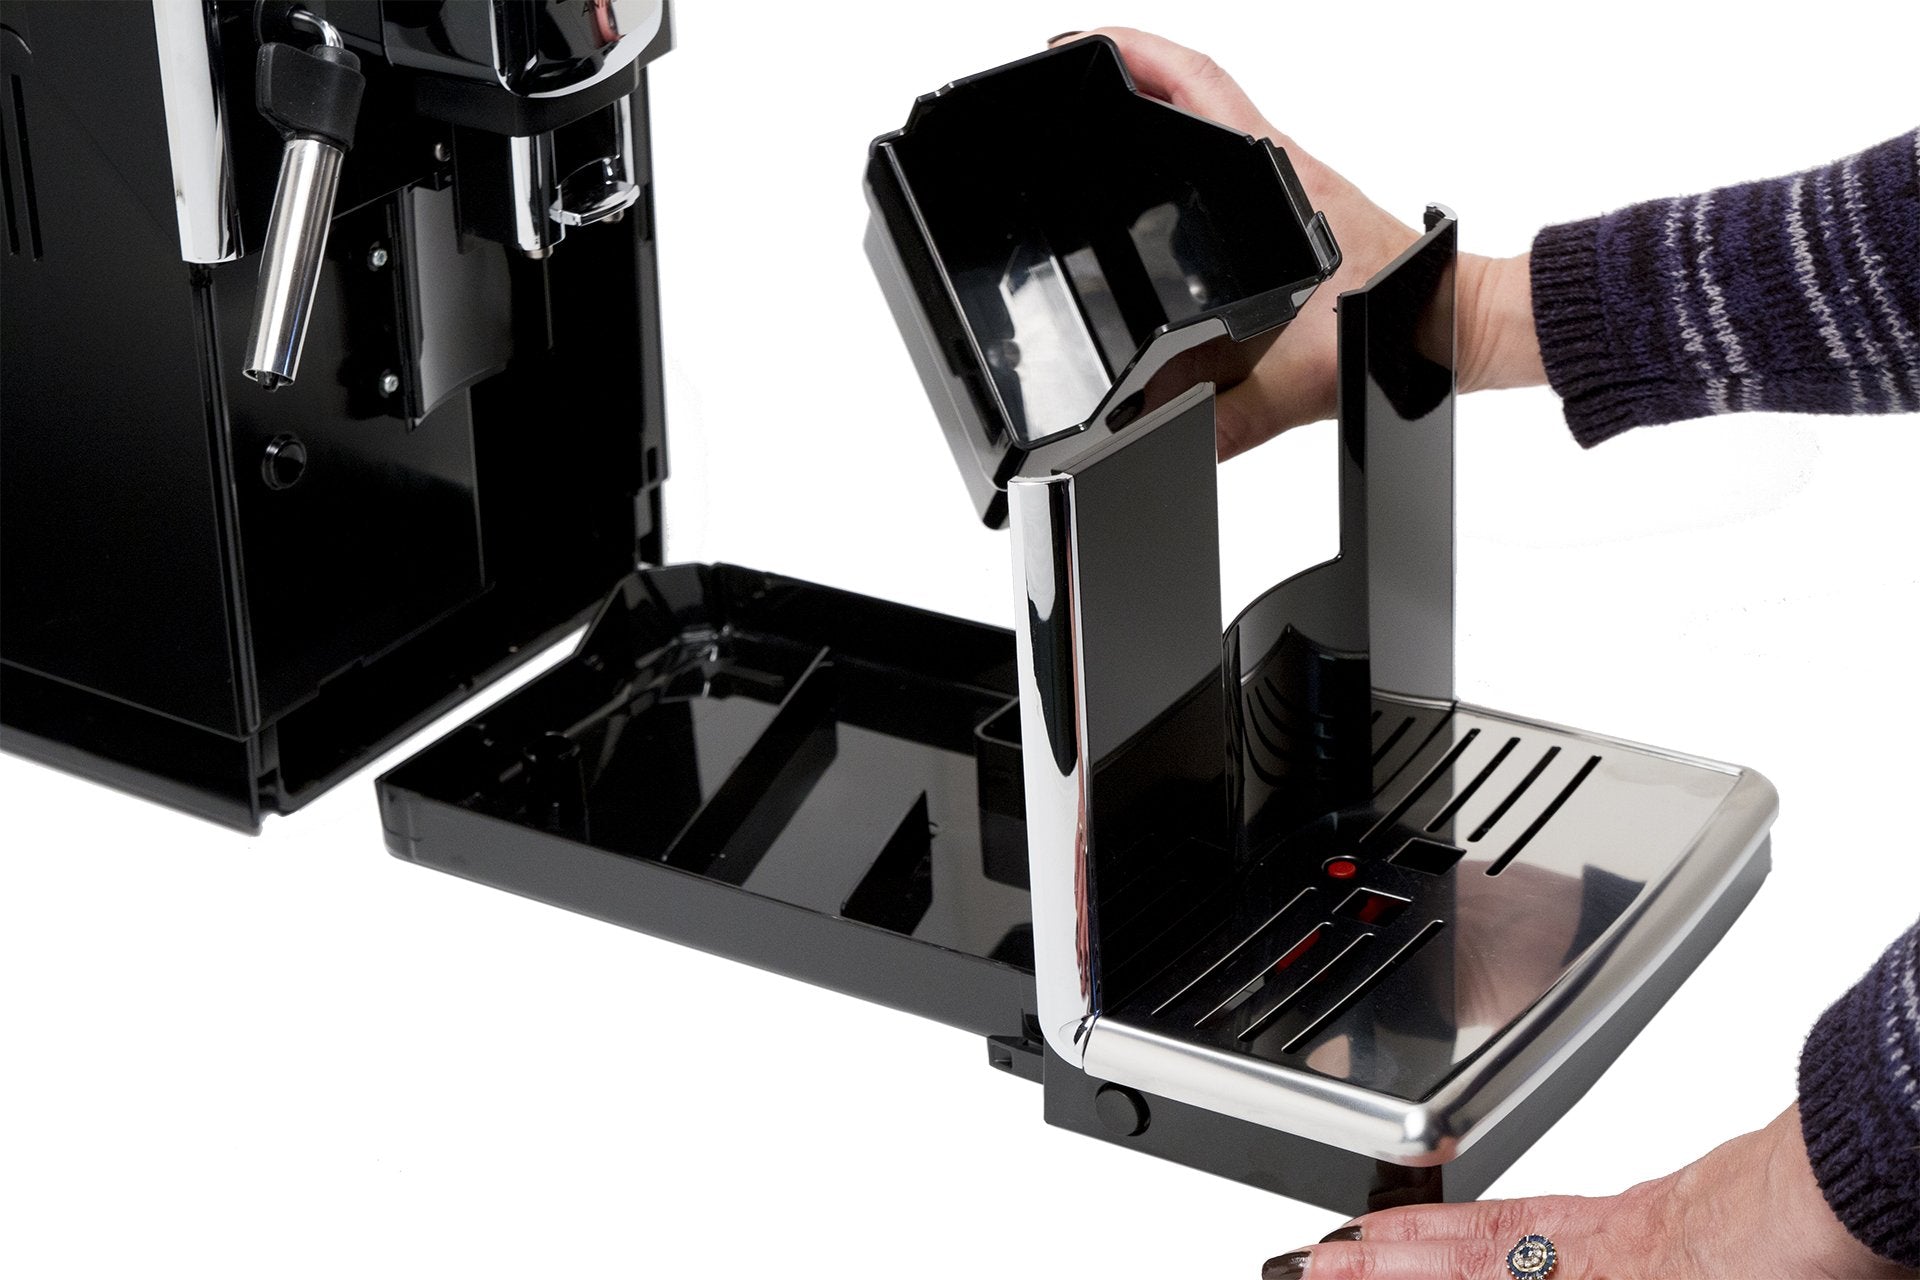 Refurbished Gaggia Anima Super-Automatic Espresso Machine - Dreg Box